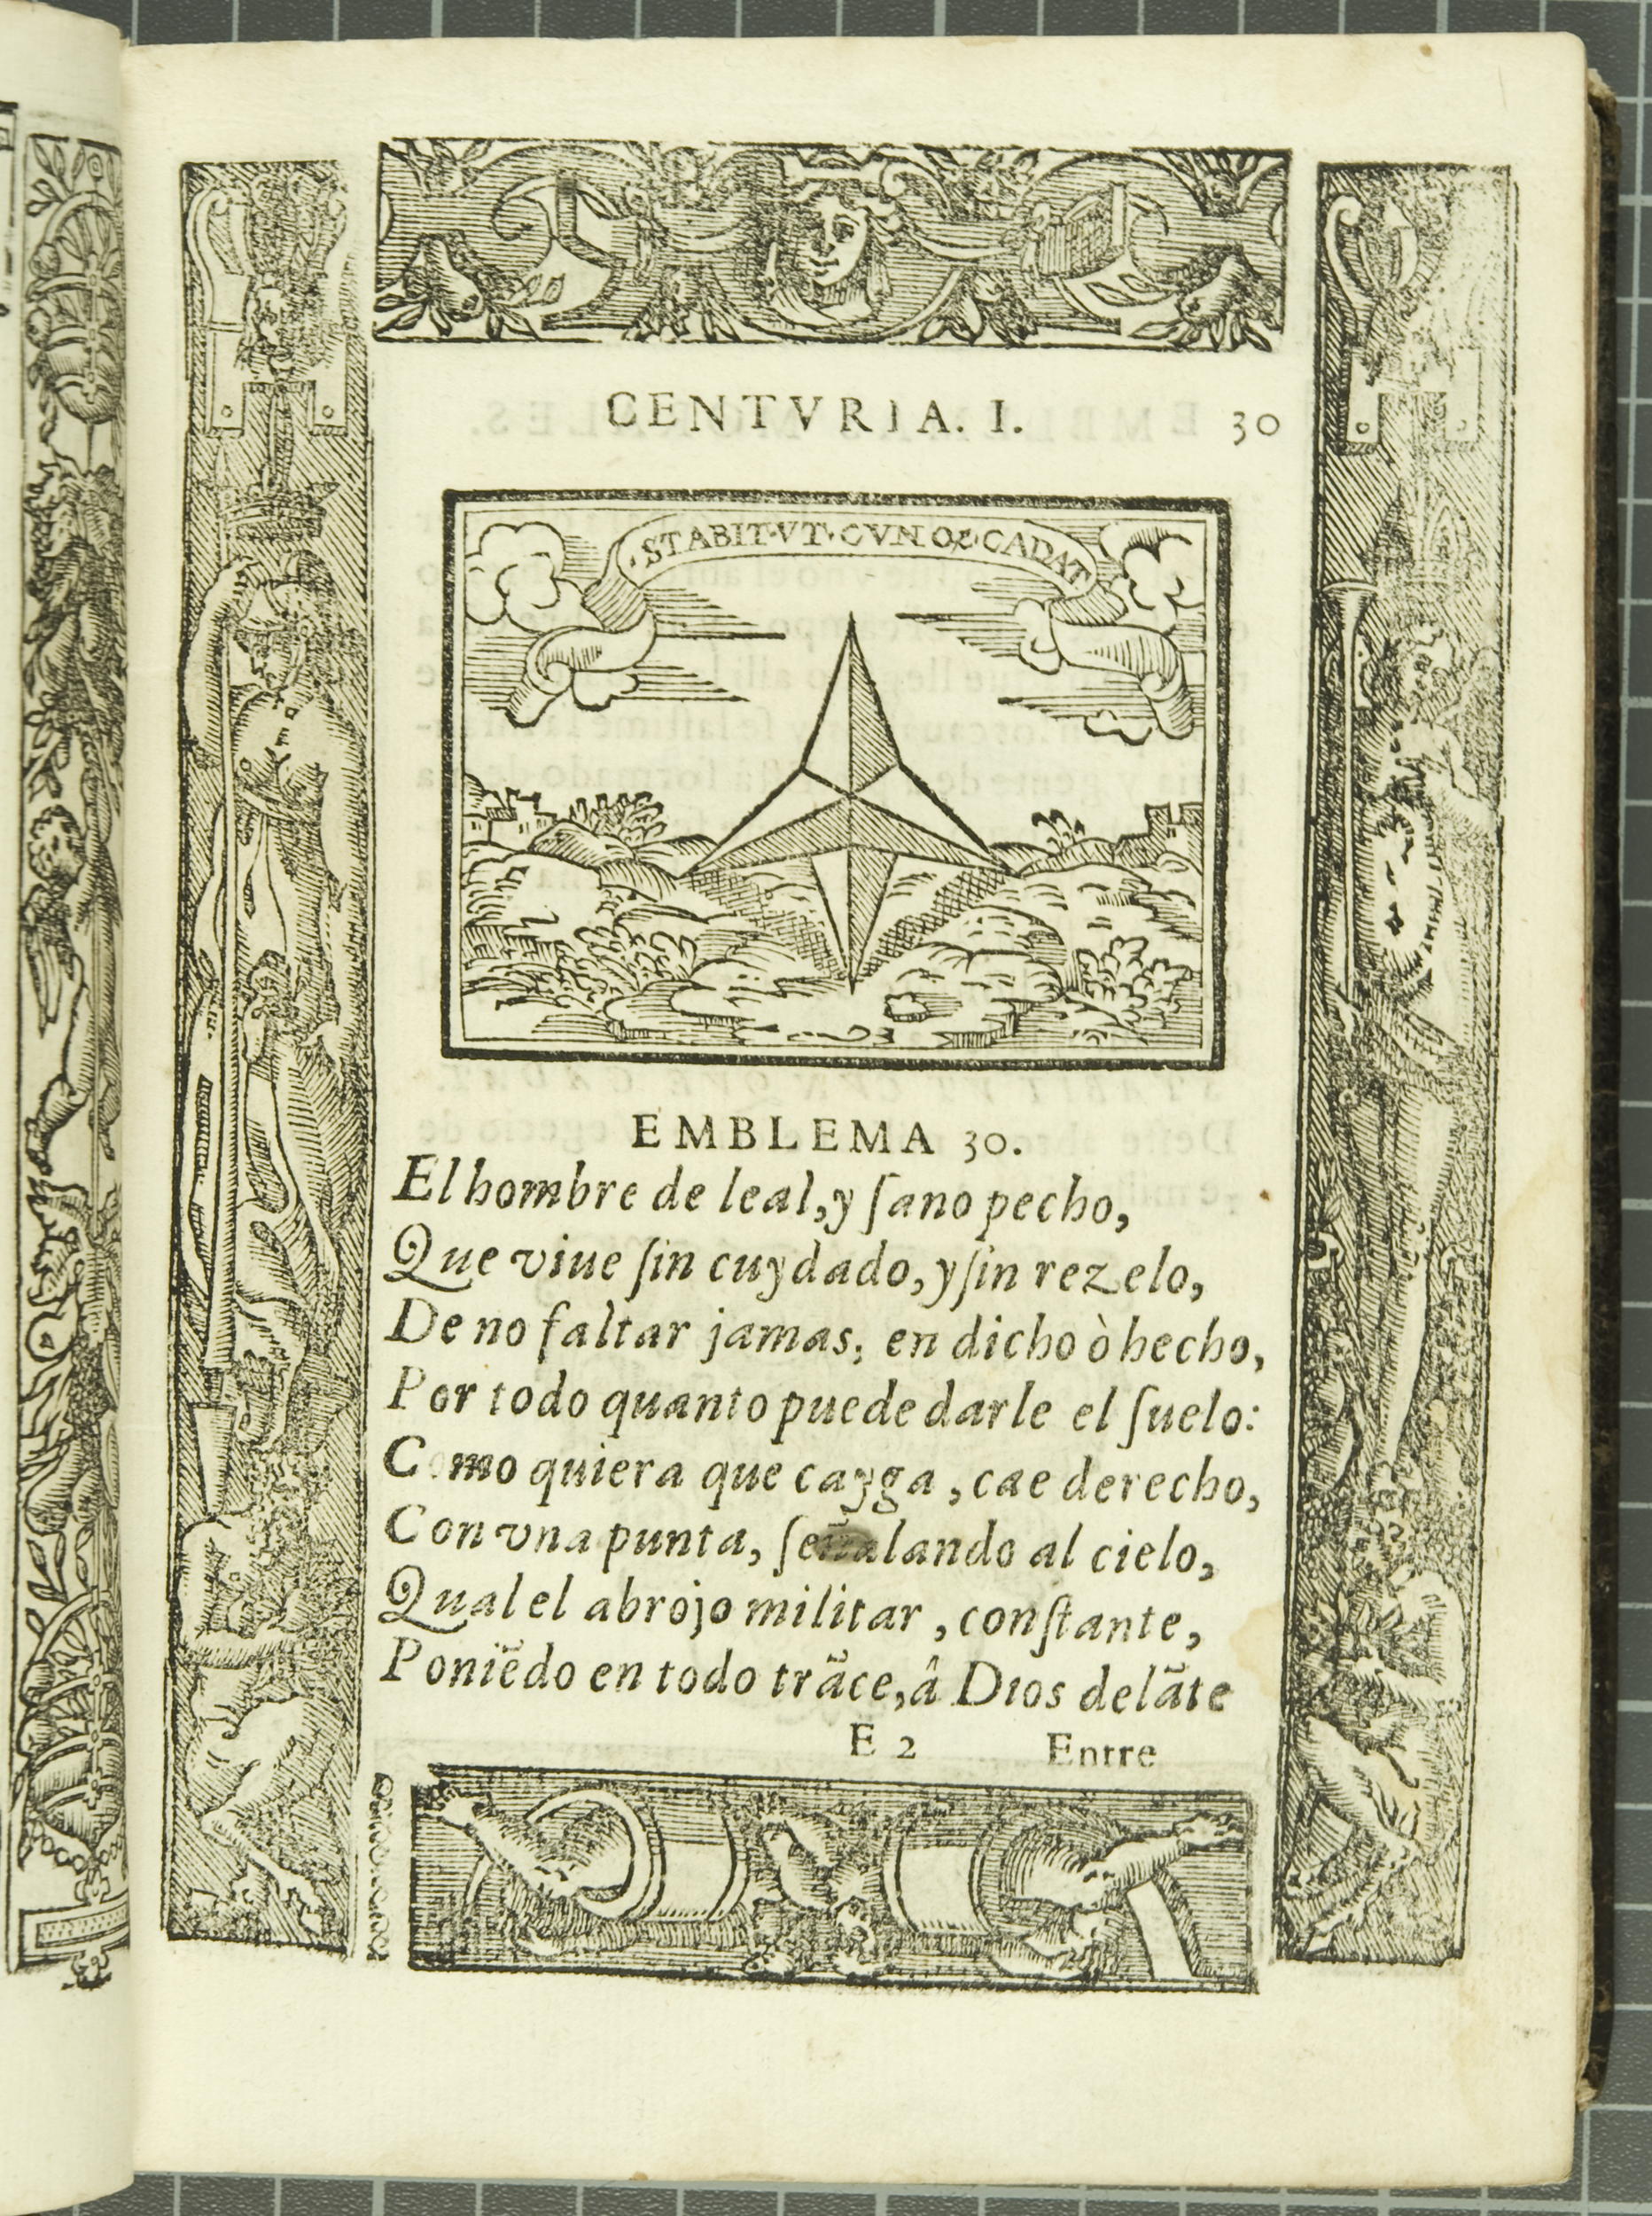 Emblem 30: "Stabit ut cunorum cadat" (  ), from Covarrubias’s Emblemas morales (1610).